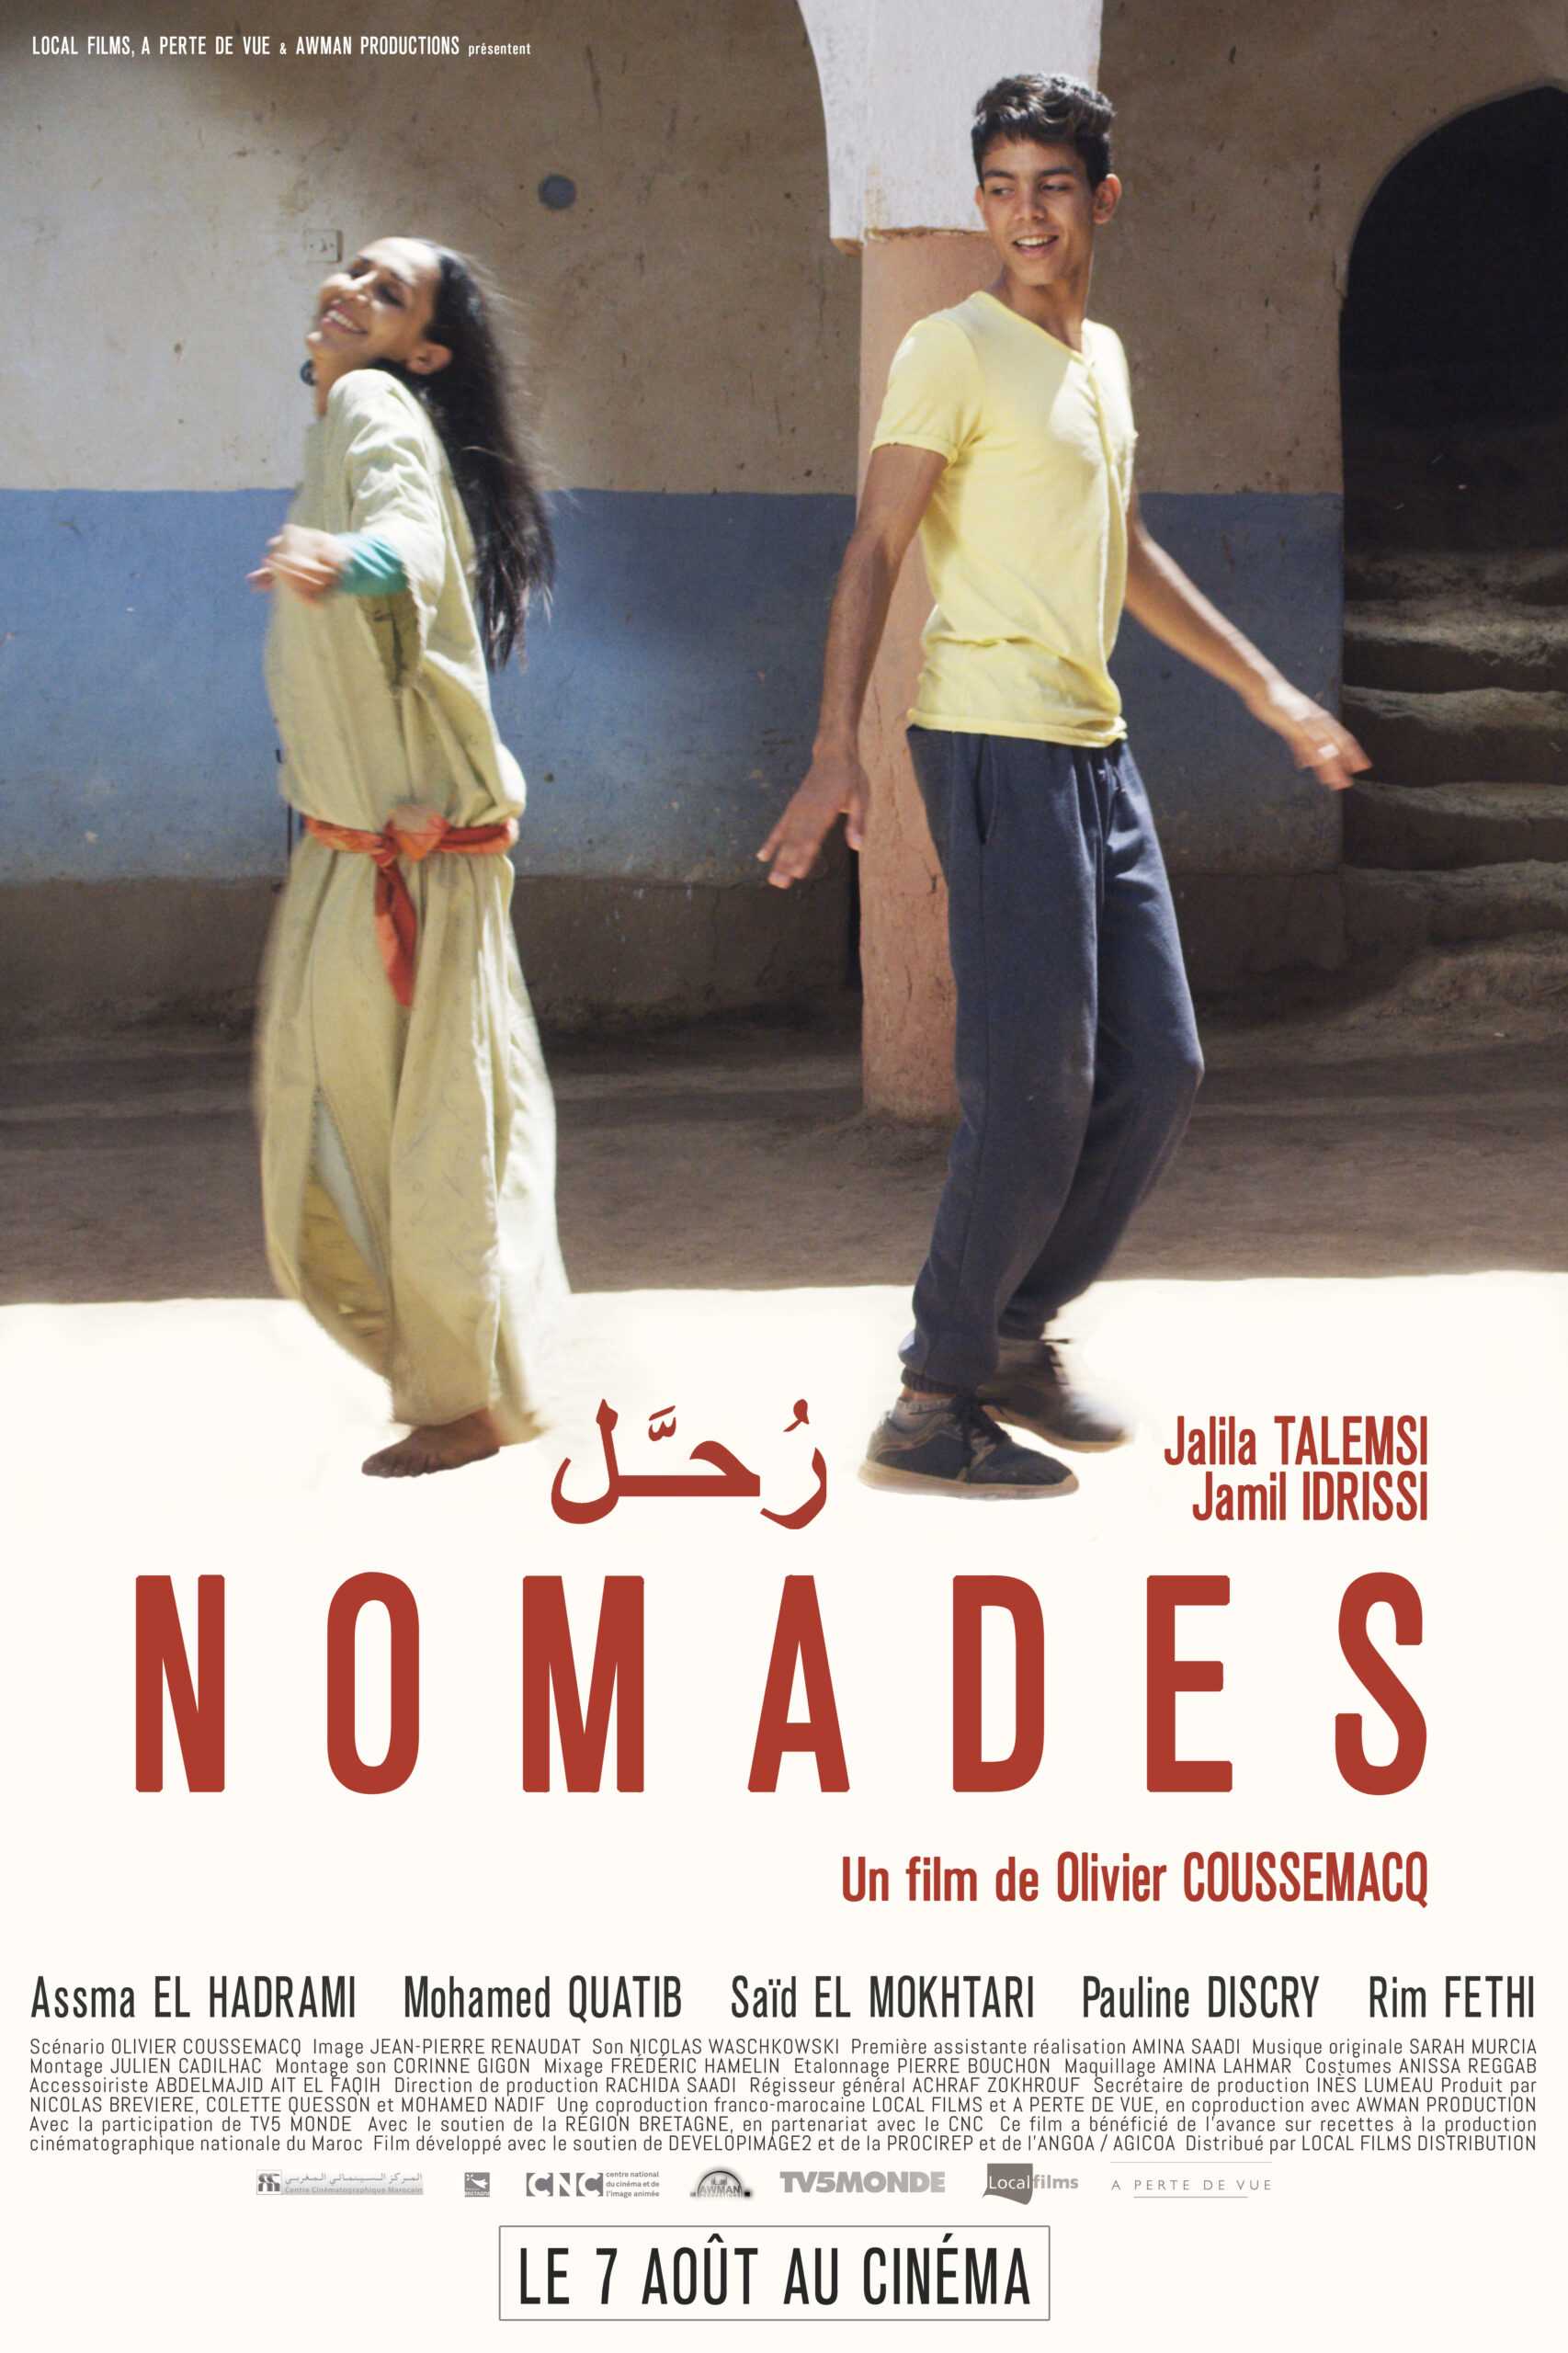 NOMADS / Olivier COUSSEMACQ